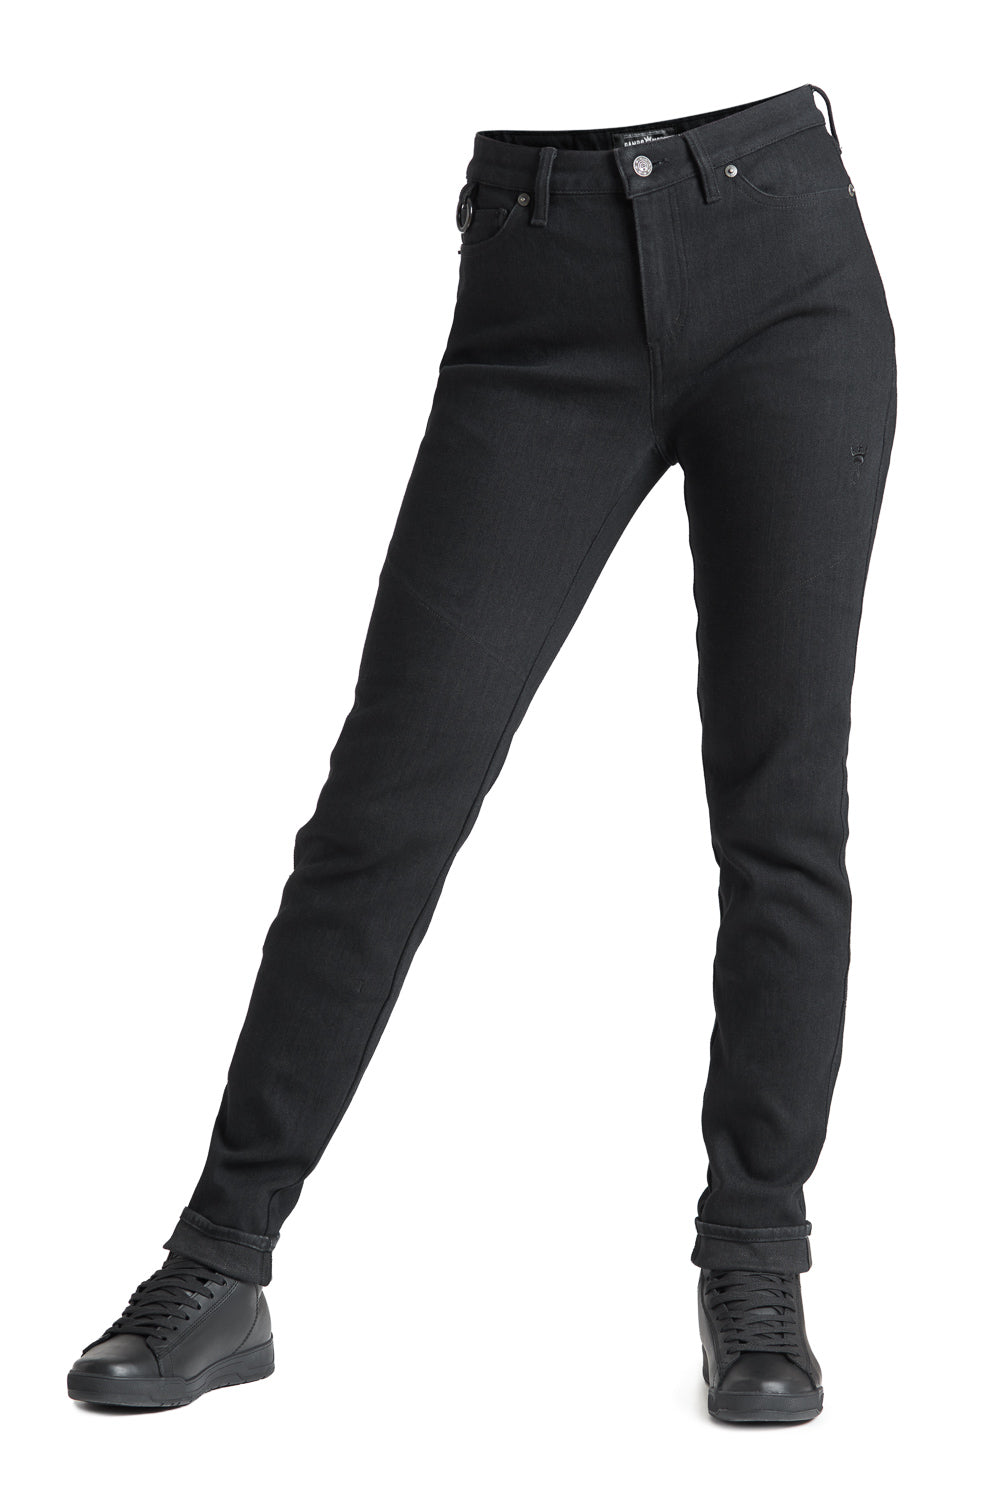 RST x Kevlar® Reinforced Jegging Jeans Women Textile - Black Size 3XL